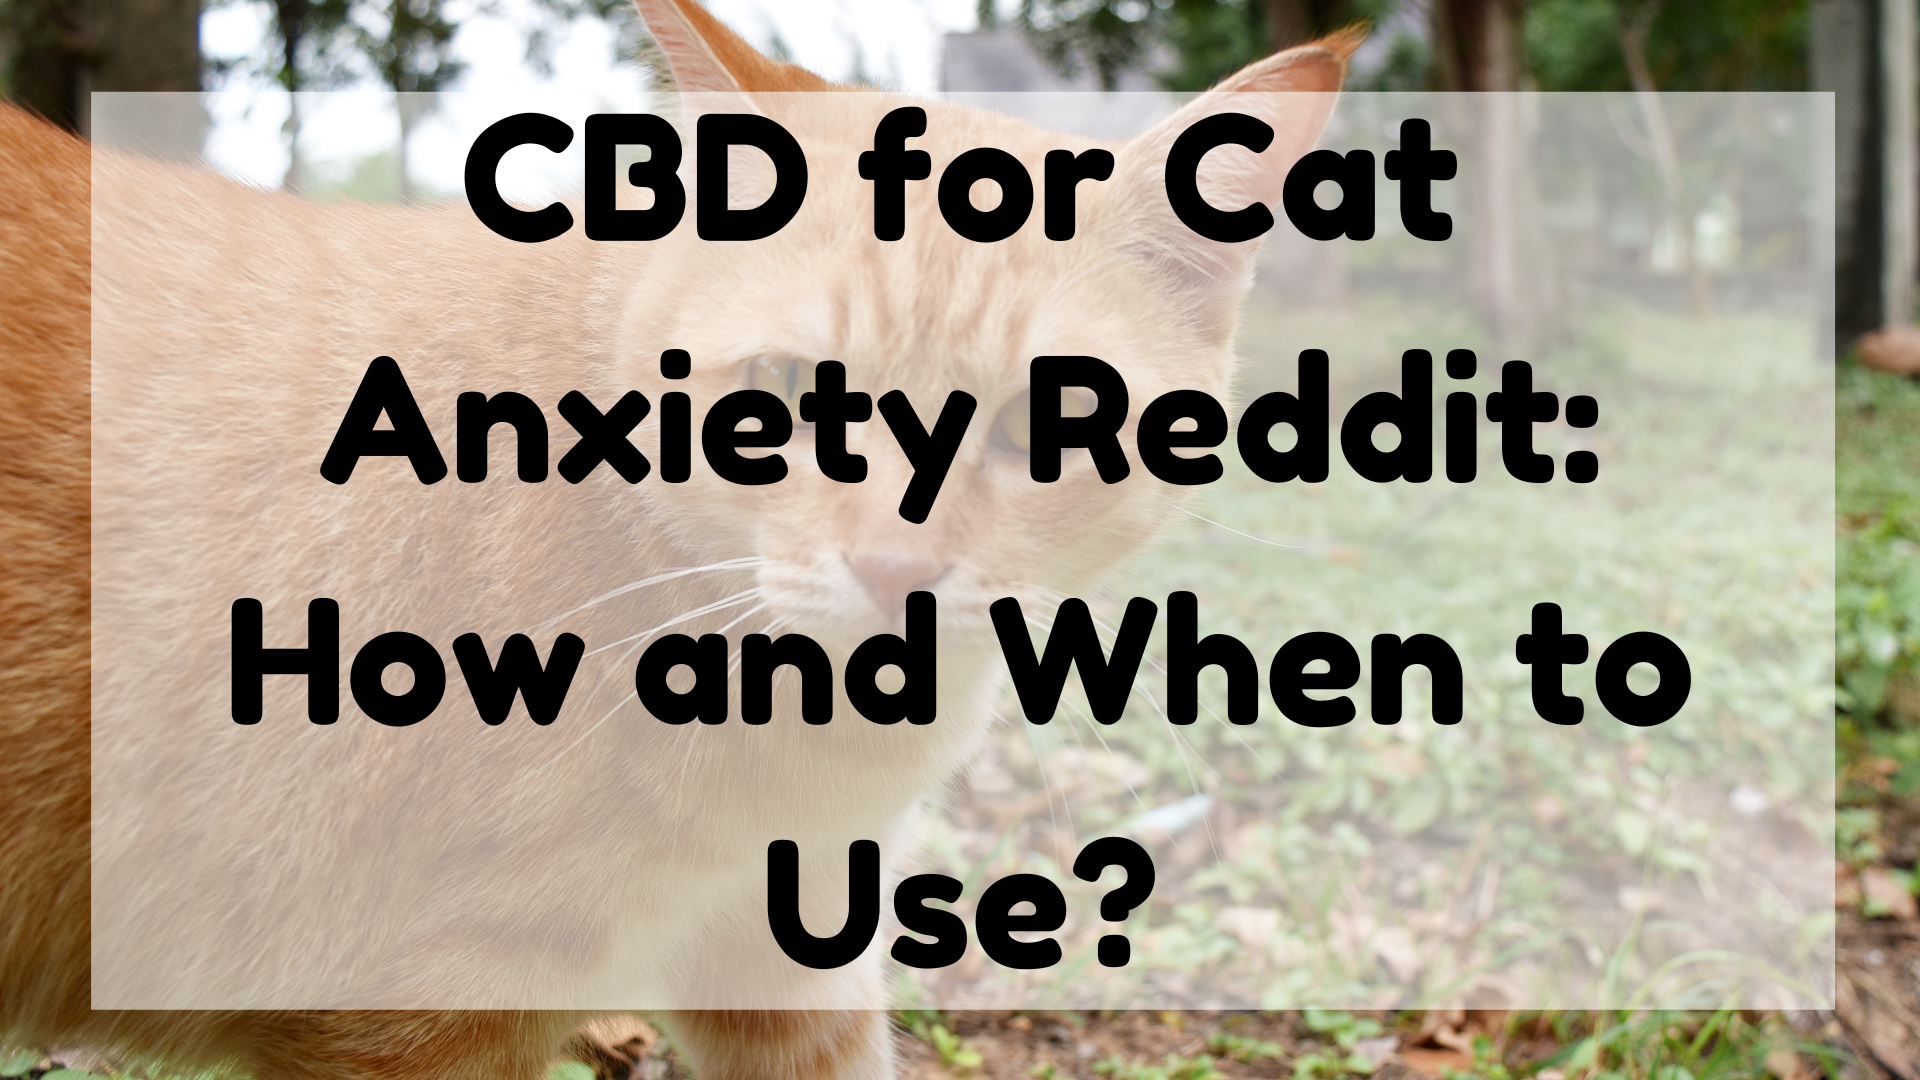 CBD for Cat Anxiety Reddit